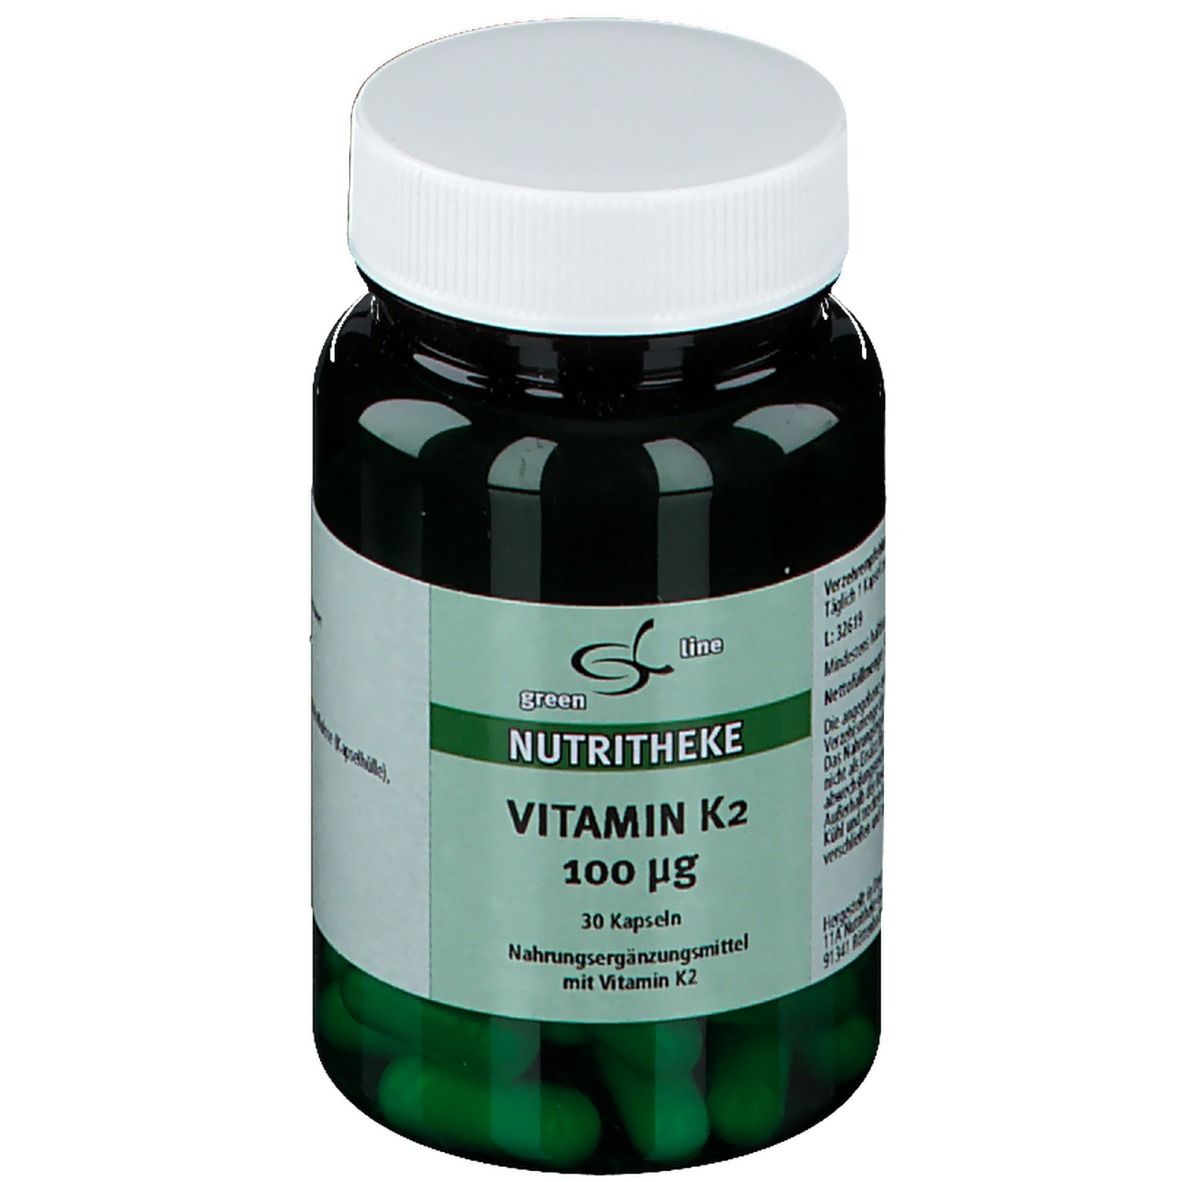 Nutritheke Vitamine K2 100 µg